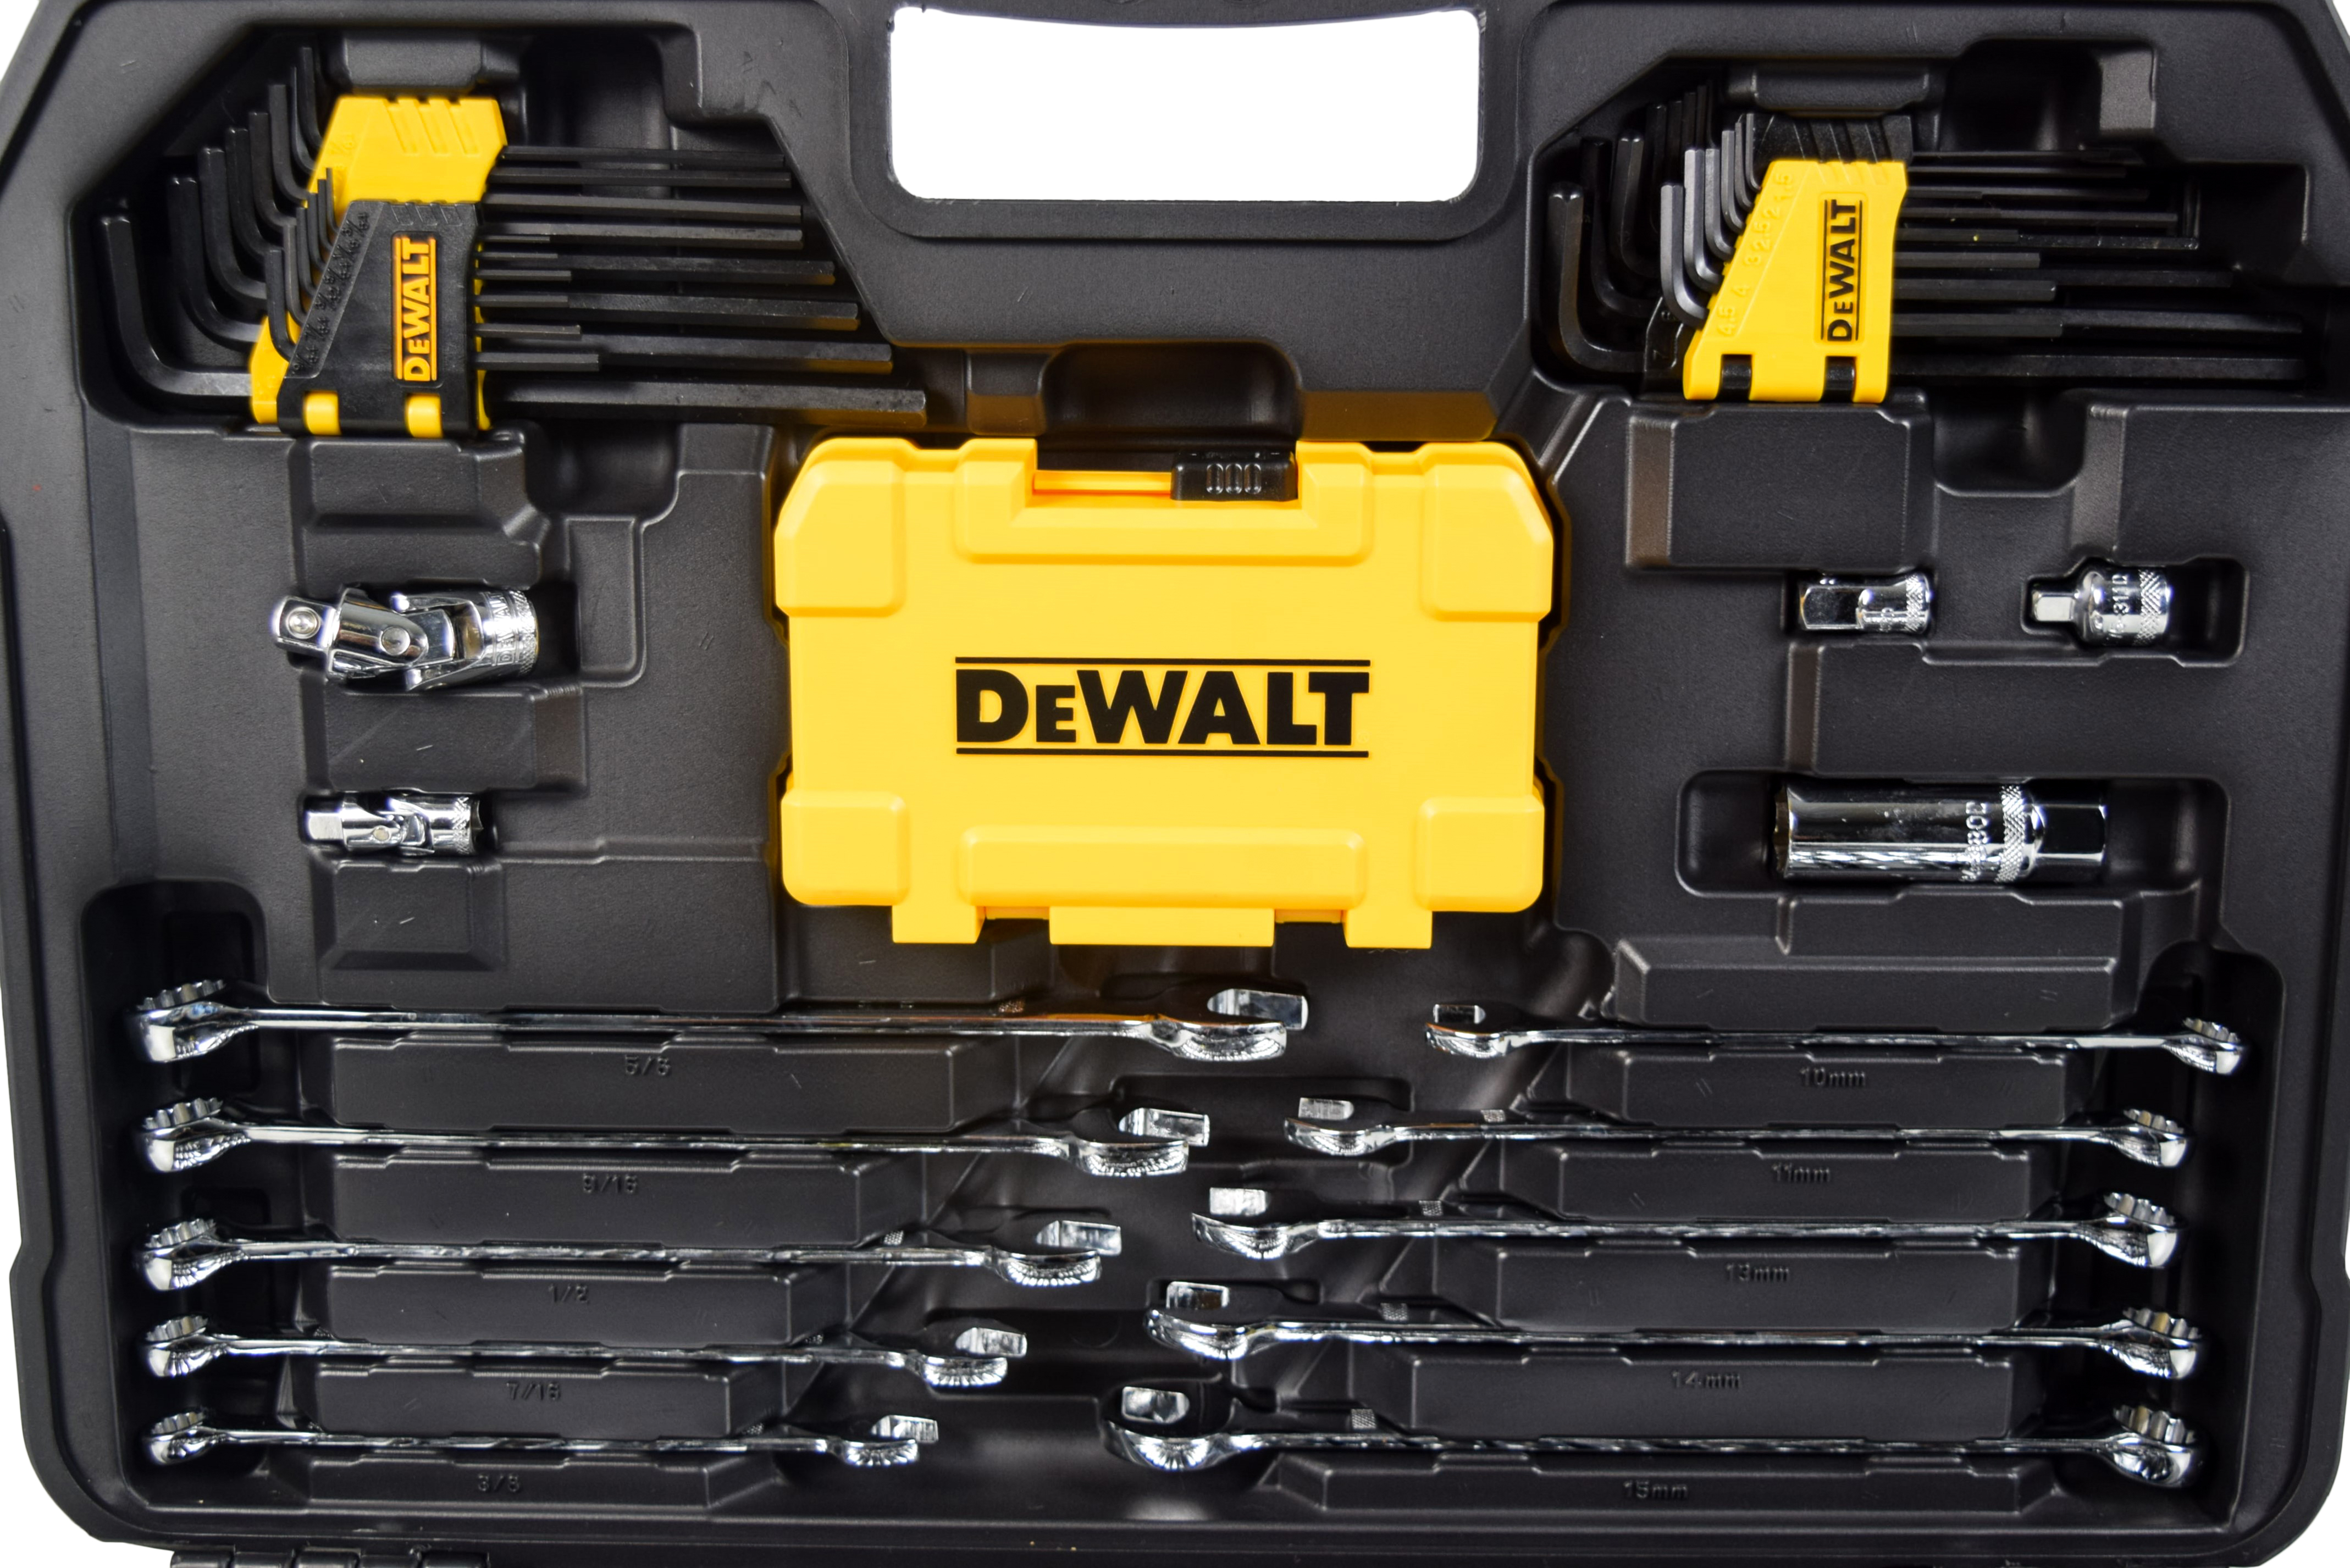 Dewalt DWMT73802 Mechanics Tool Kit Set with Case (142 Piece) - image 4 of 8